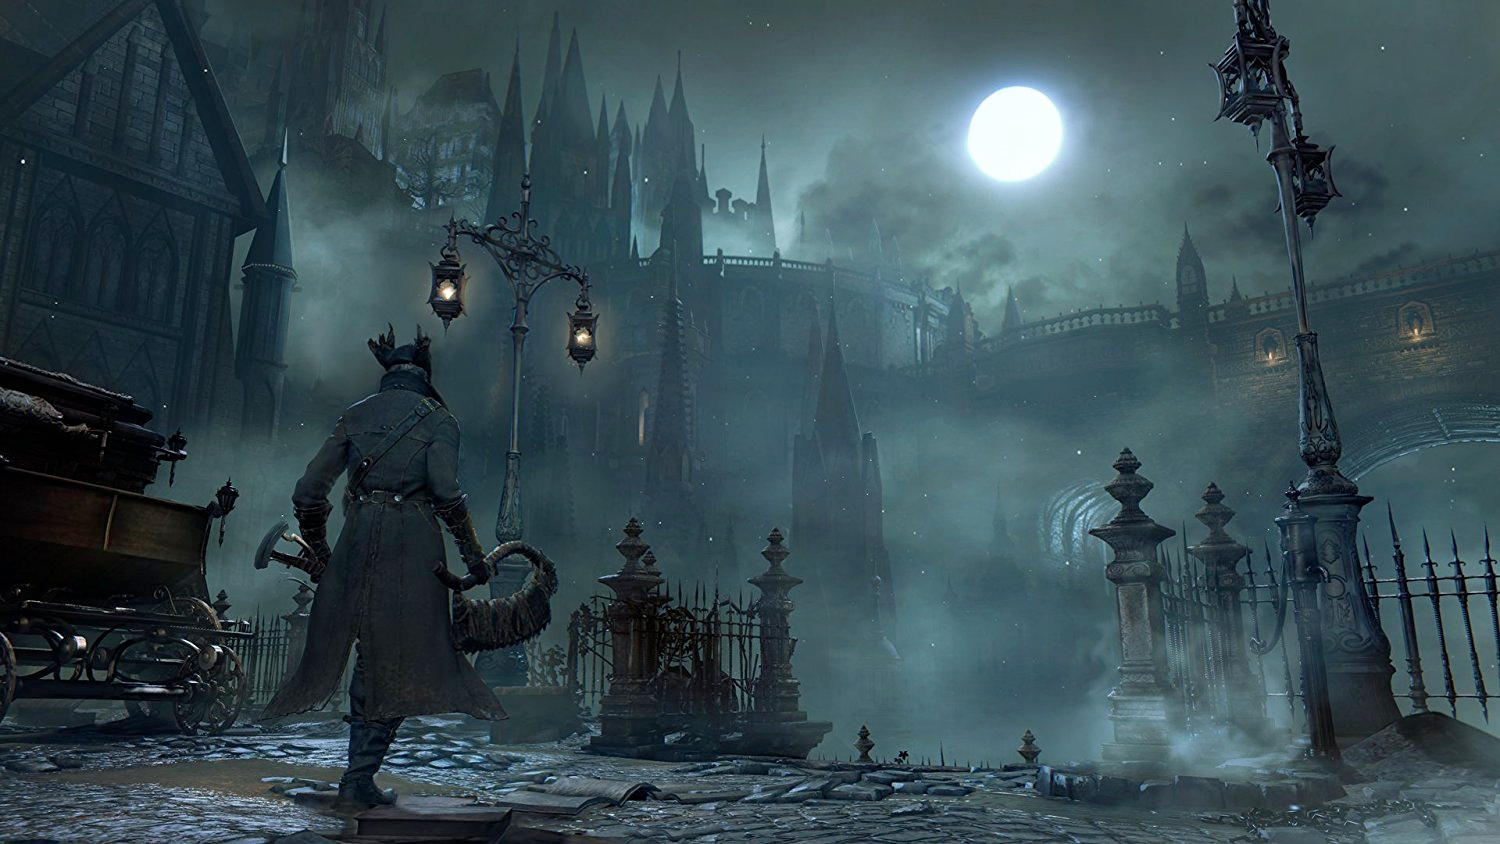 Promotional in-game screenshot of Bloodborne